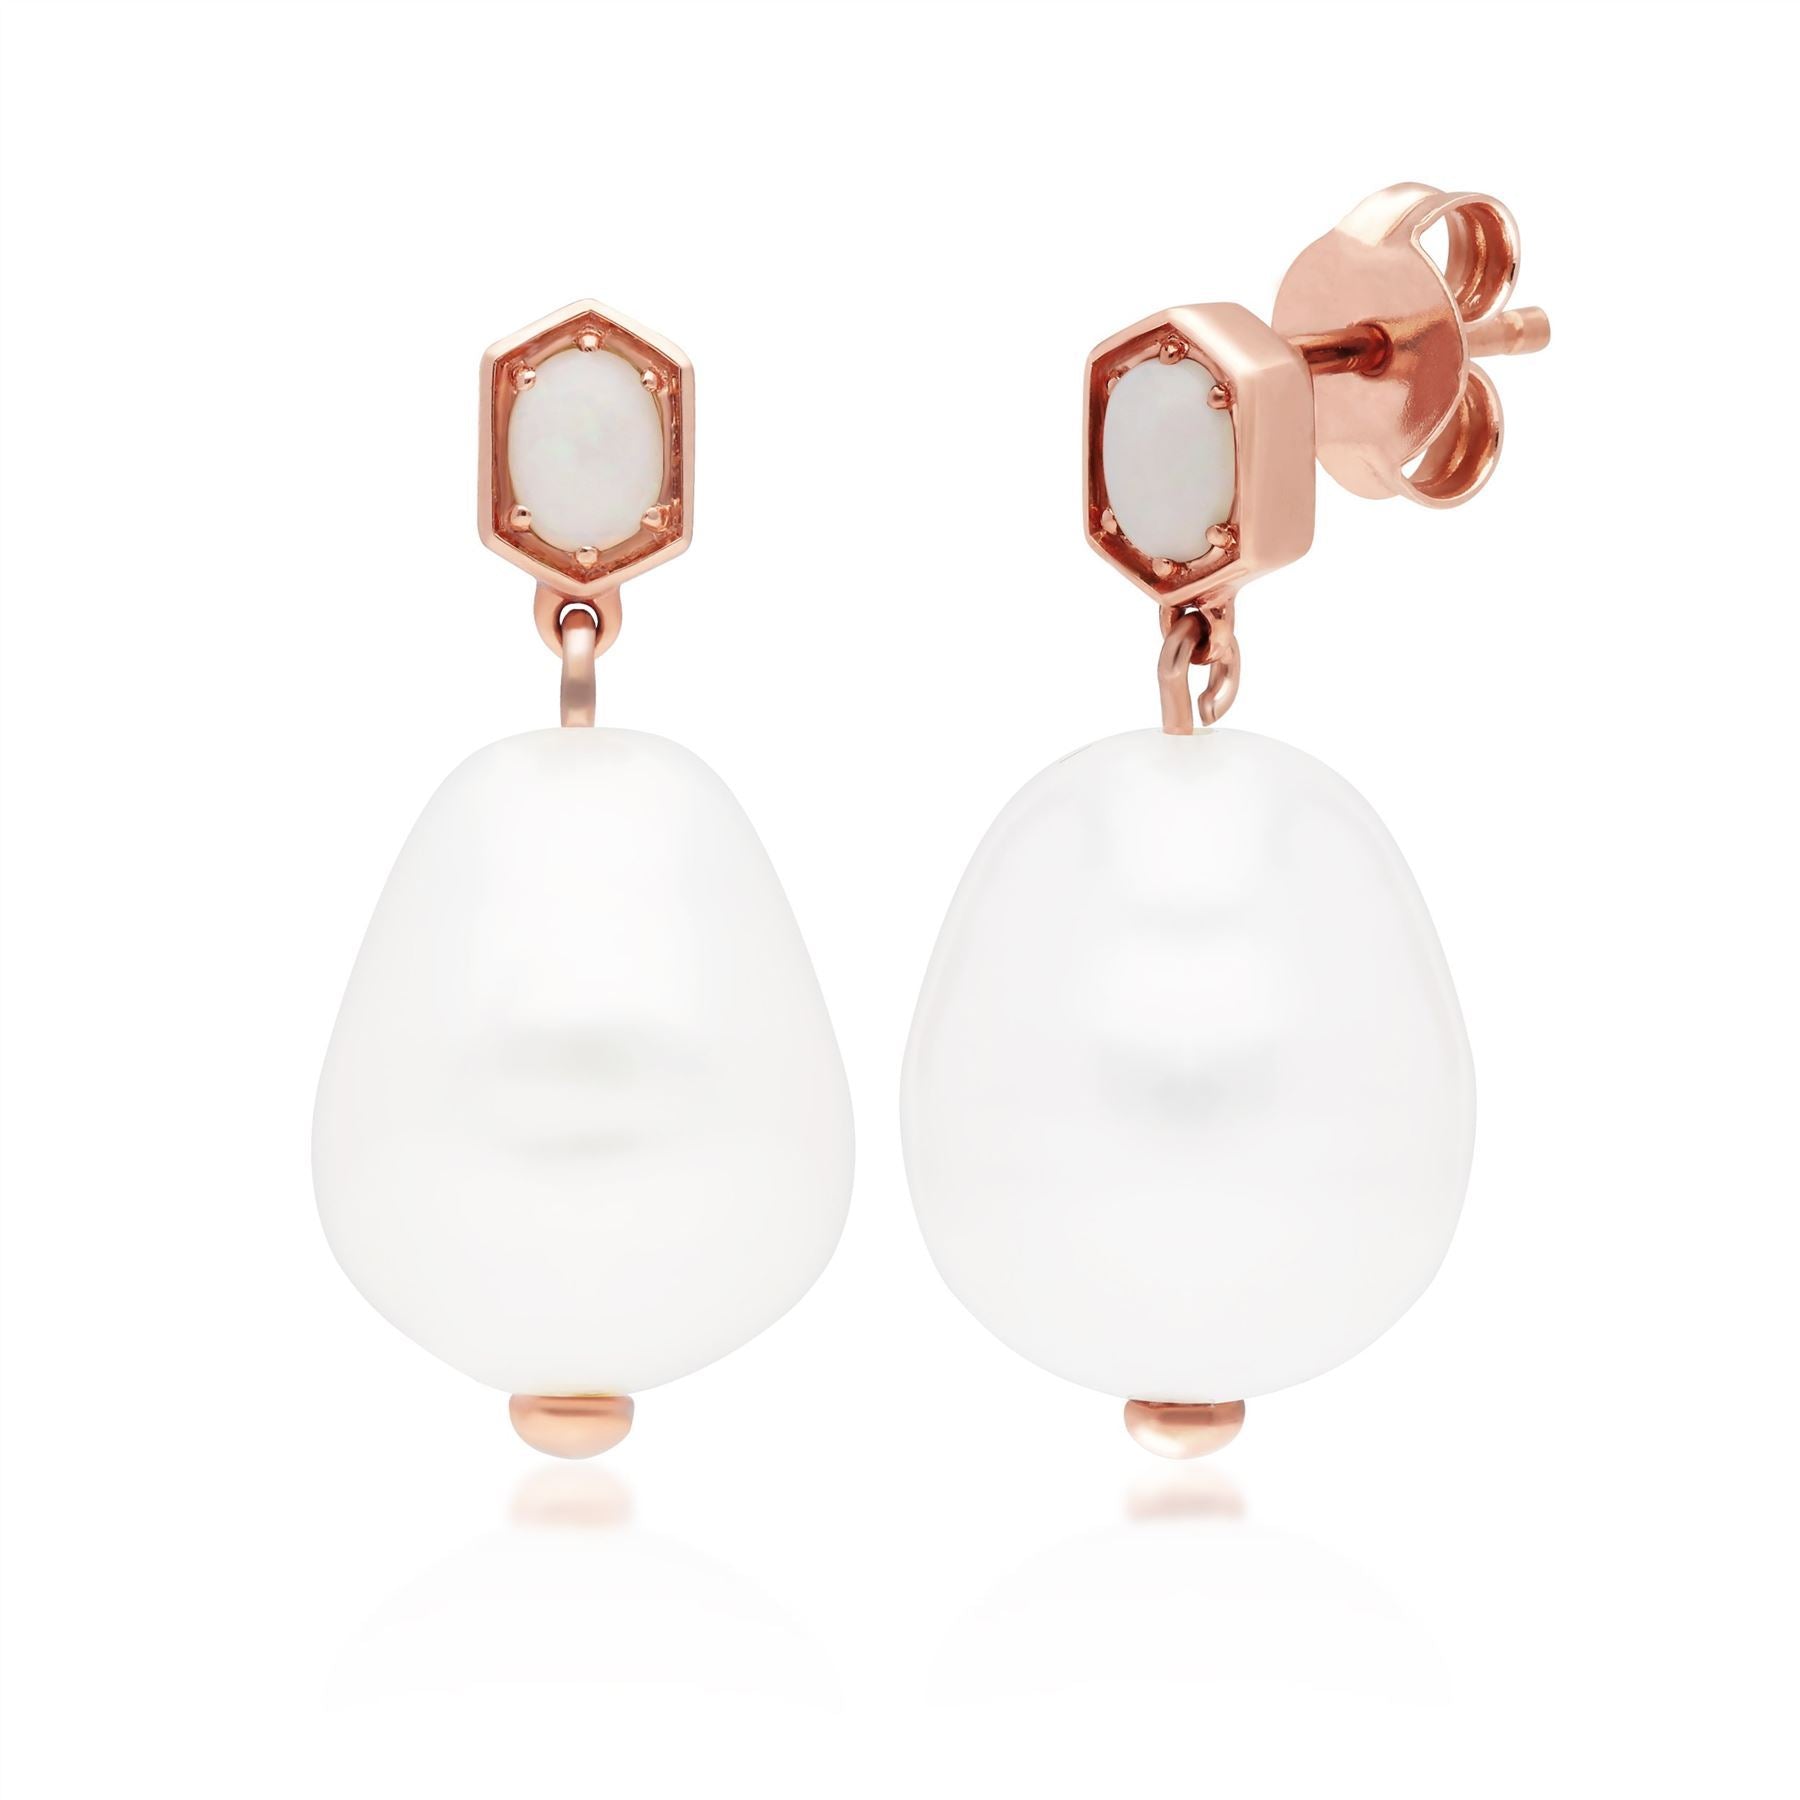 Modern Baroque Pearl & Opal Drop Earrings in Rose Gold Plated Sterling Silver